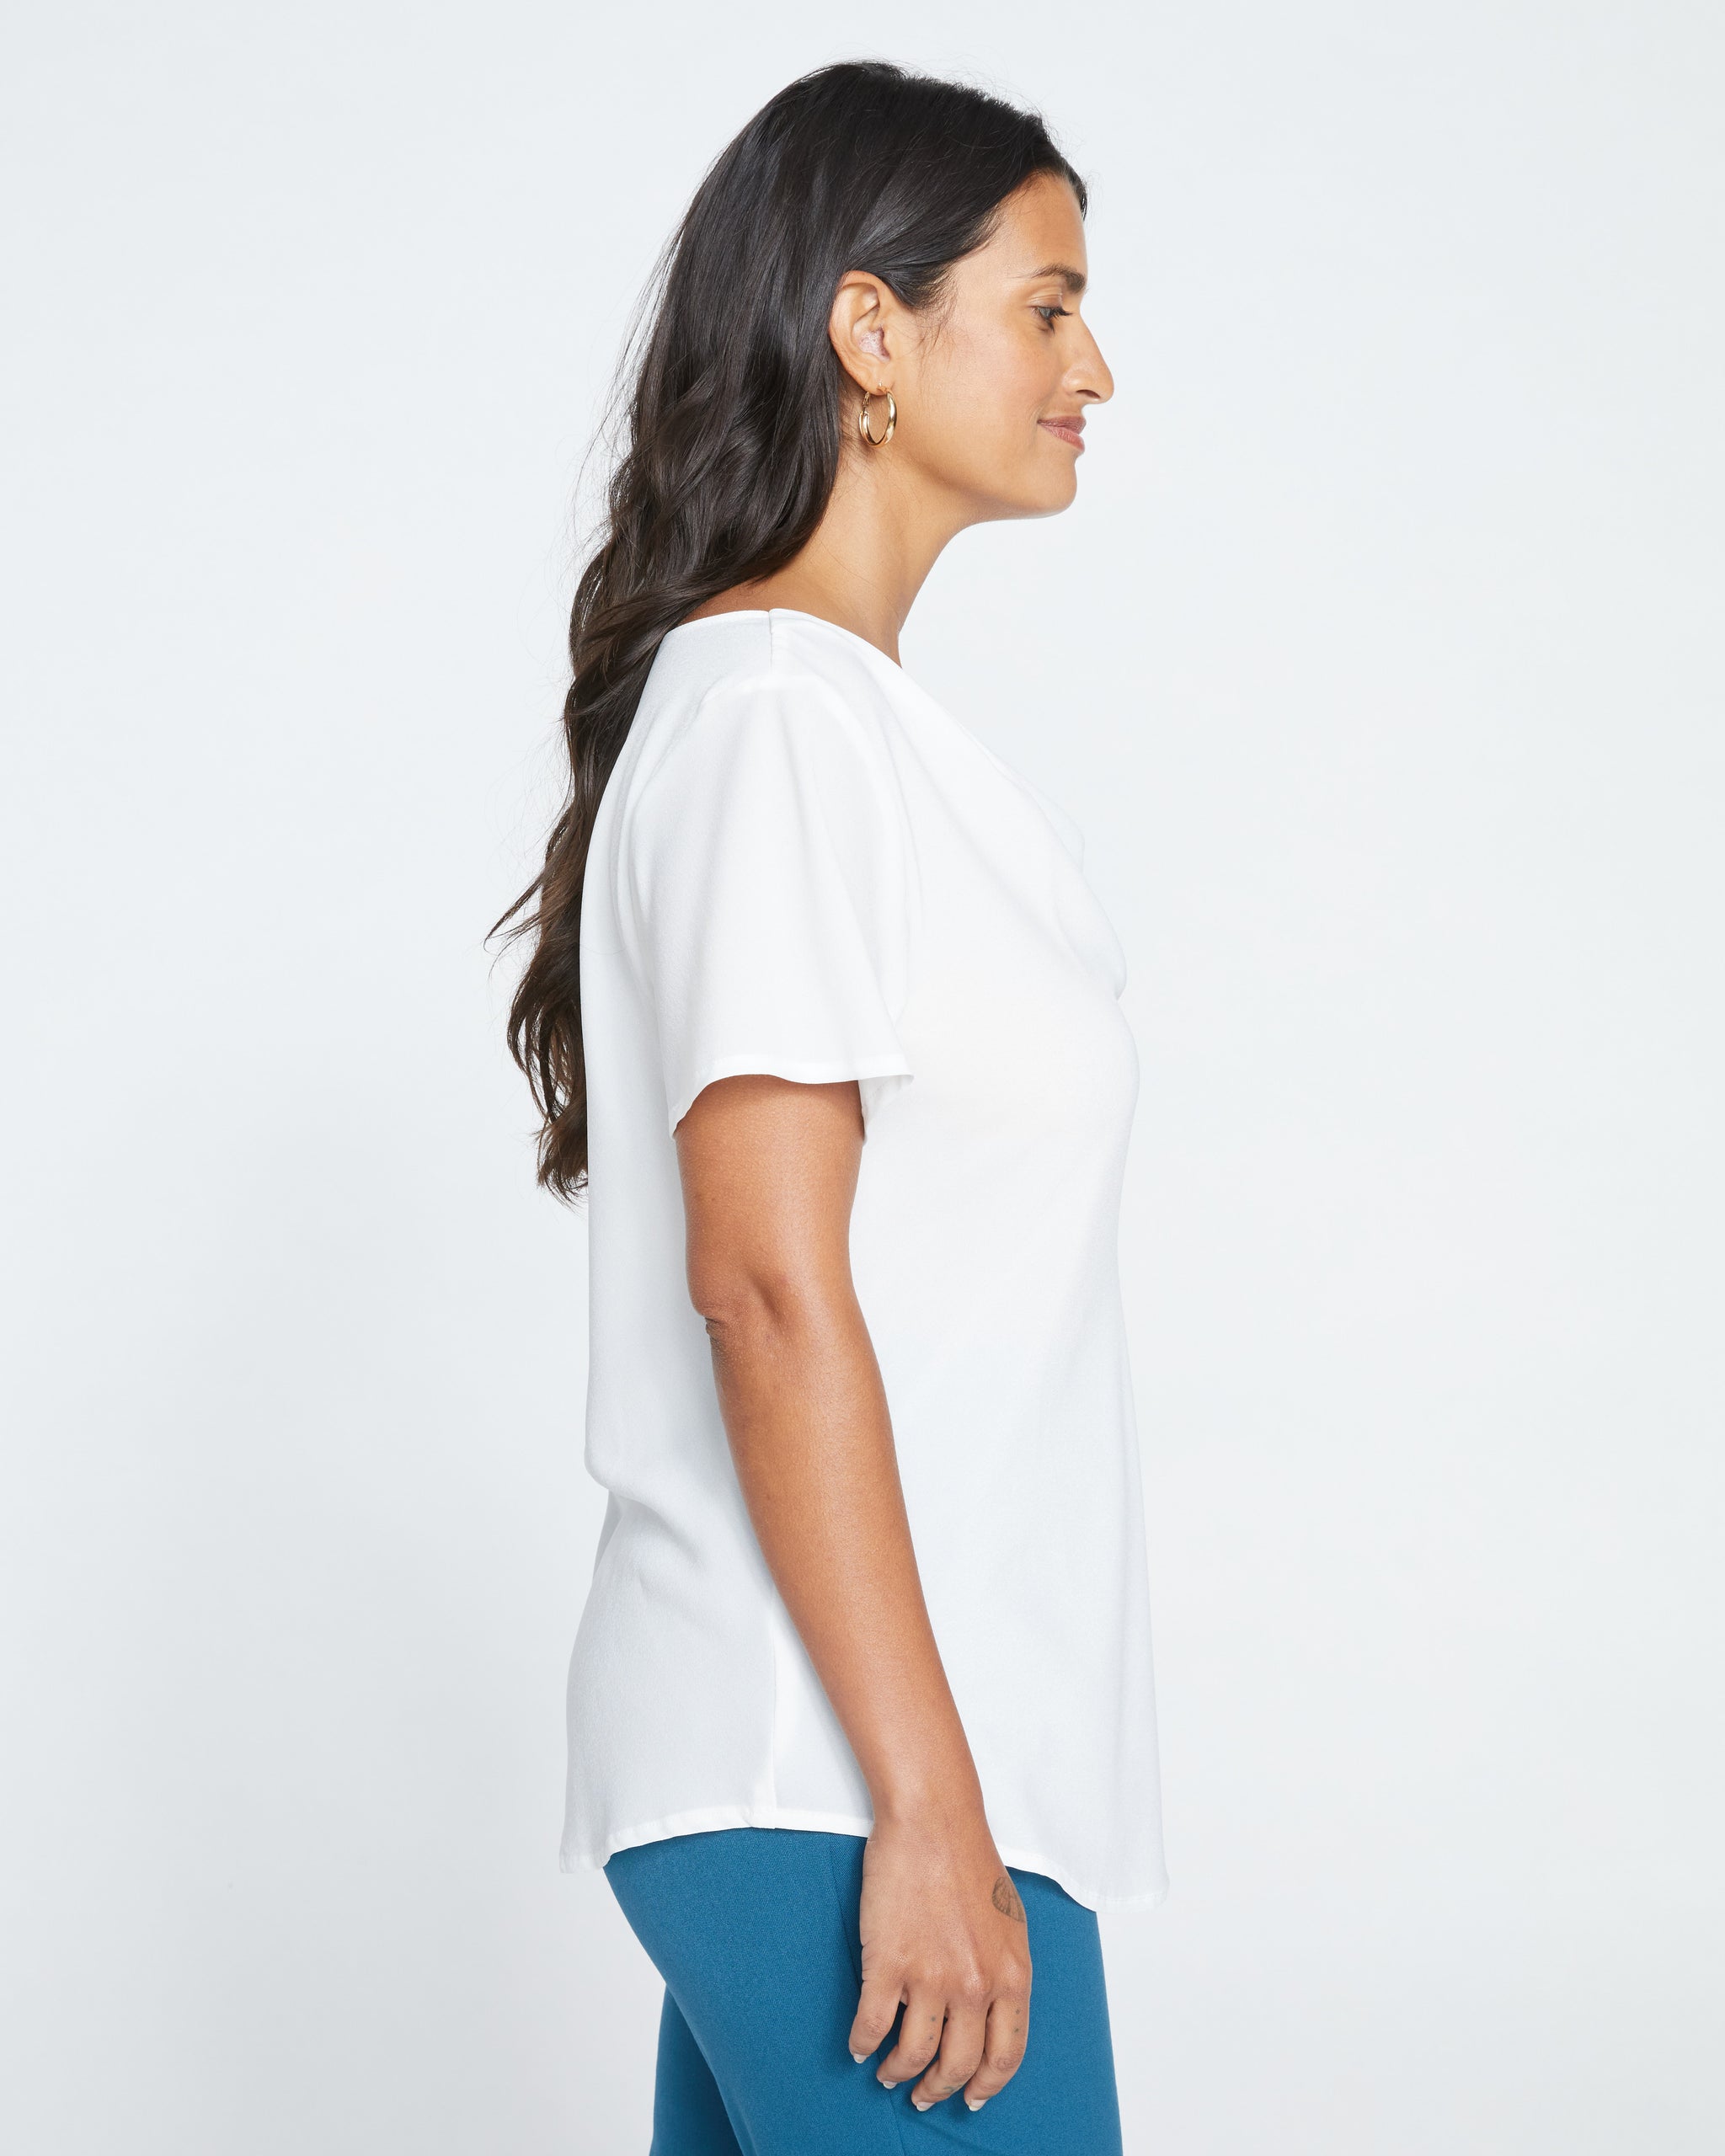 W by Worth Silk Sleeveless Cami Shell Blouse Size 10 White Sheer Sleeveless  NWT!